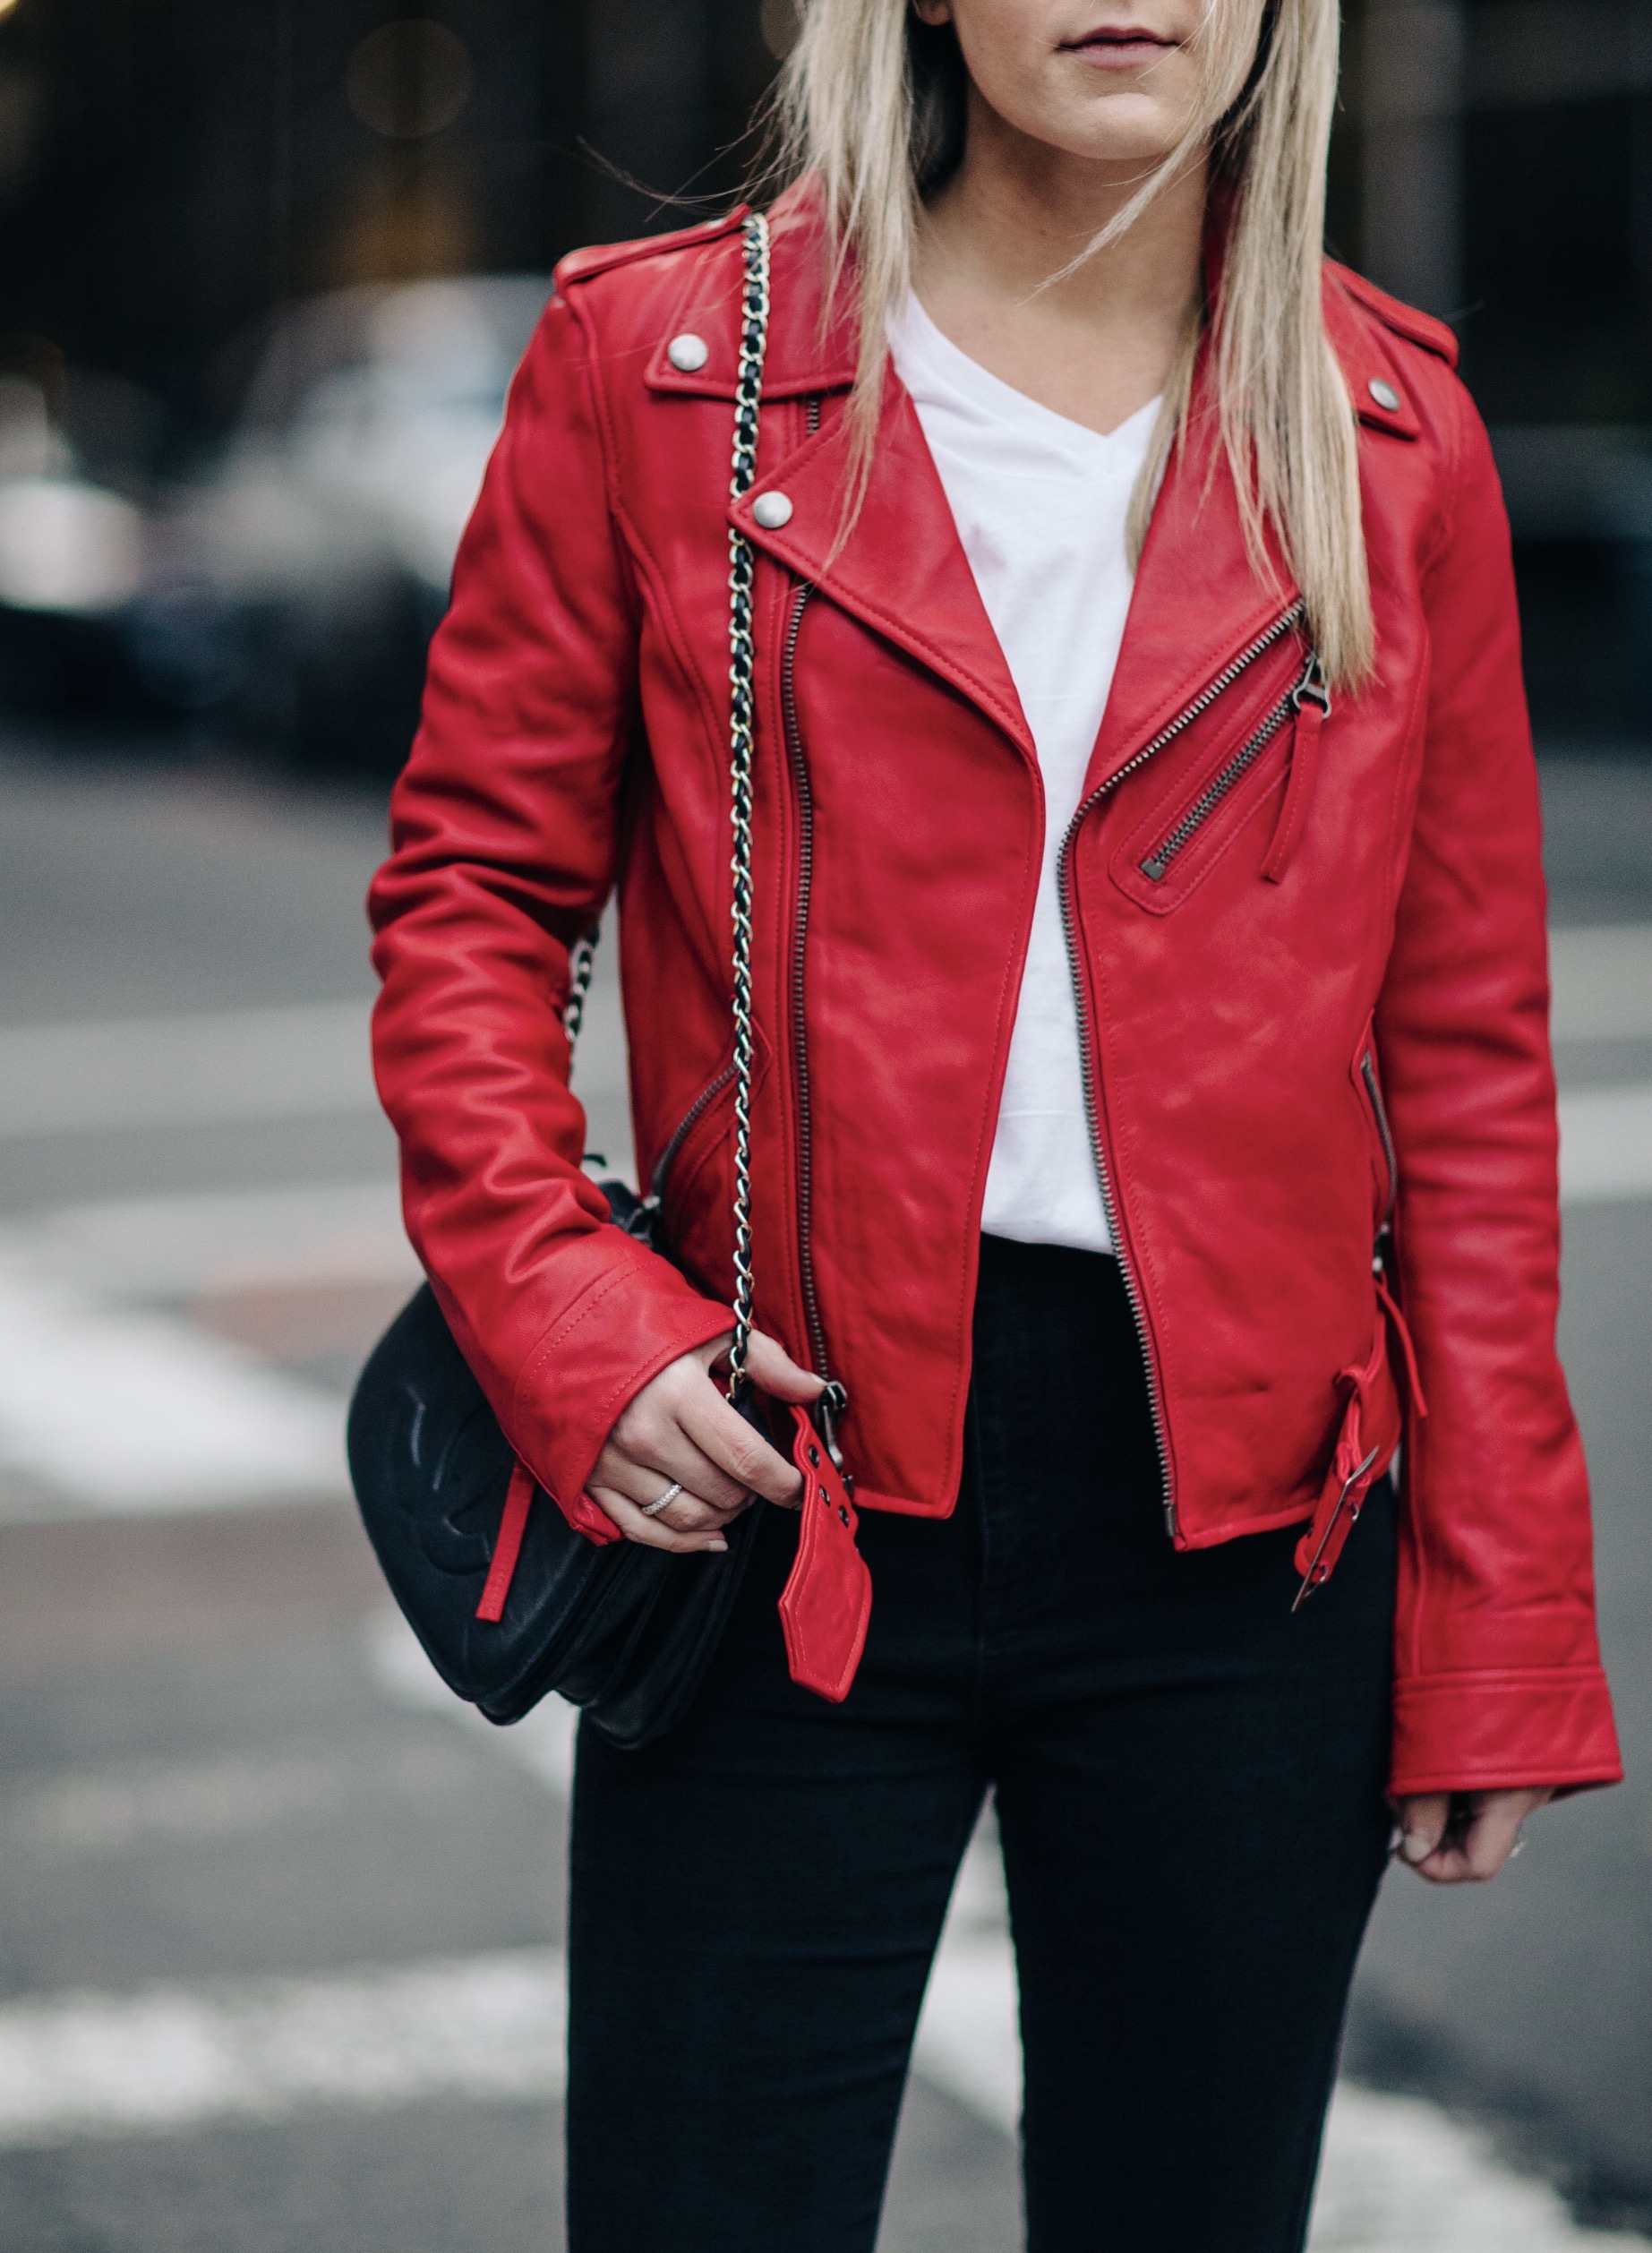 Overflod Teknologi justere Styling a Red Leather Jacket — christie ferrari